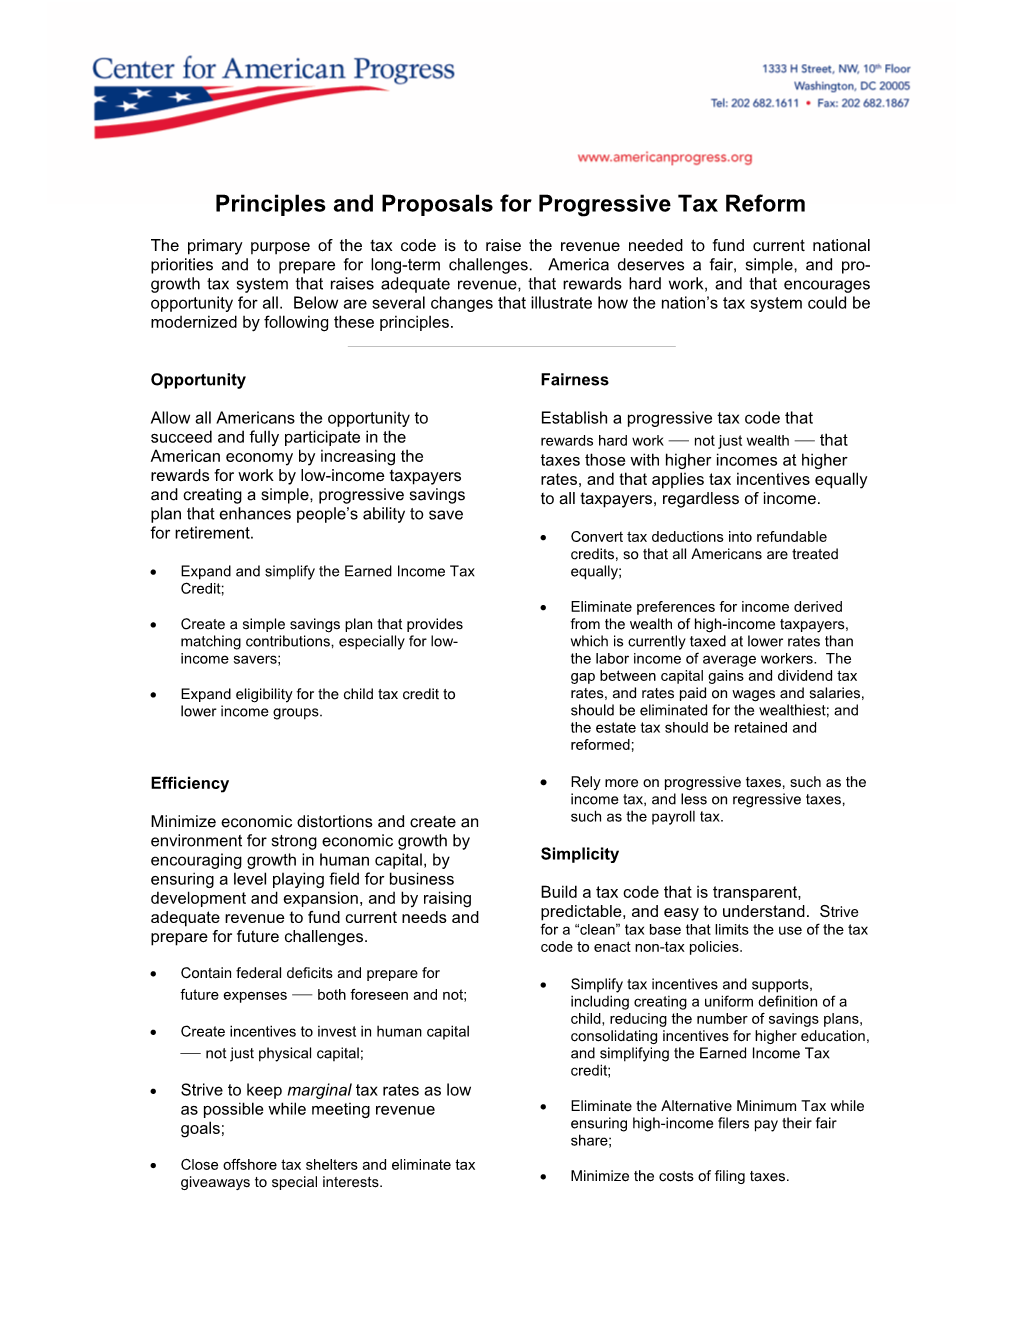 Principles for Progressive Tax Refom